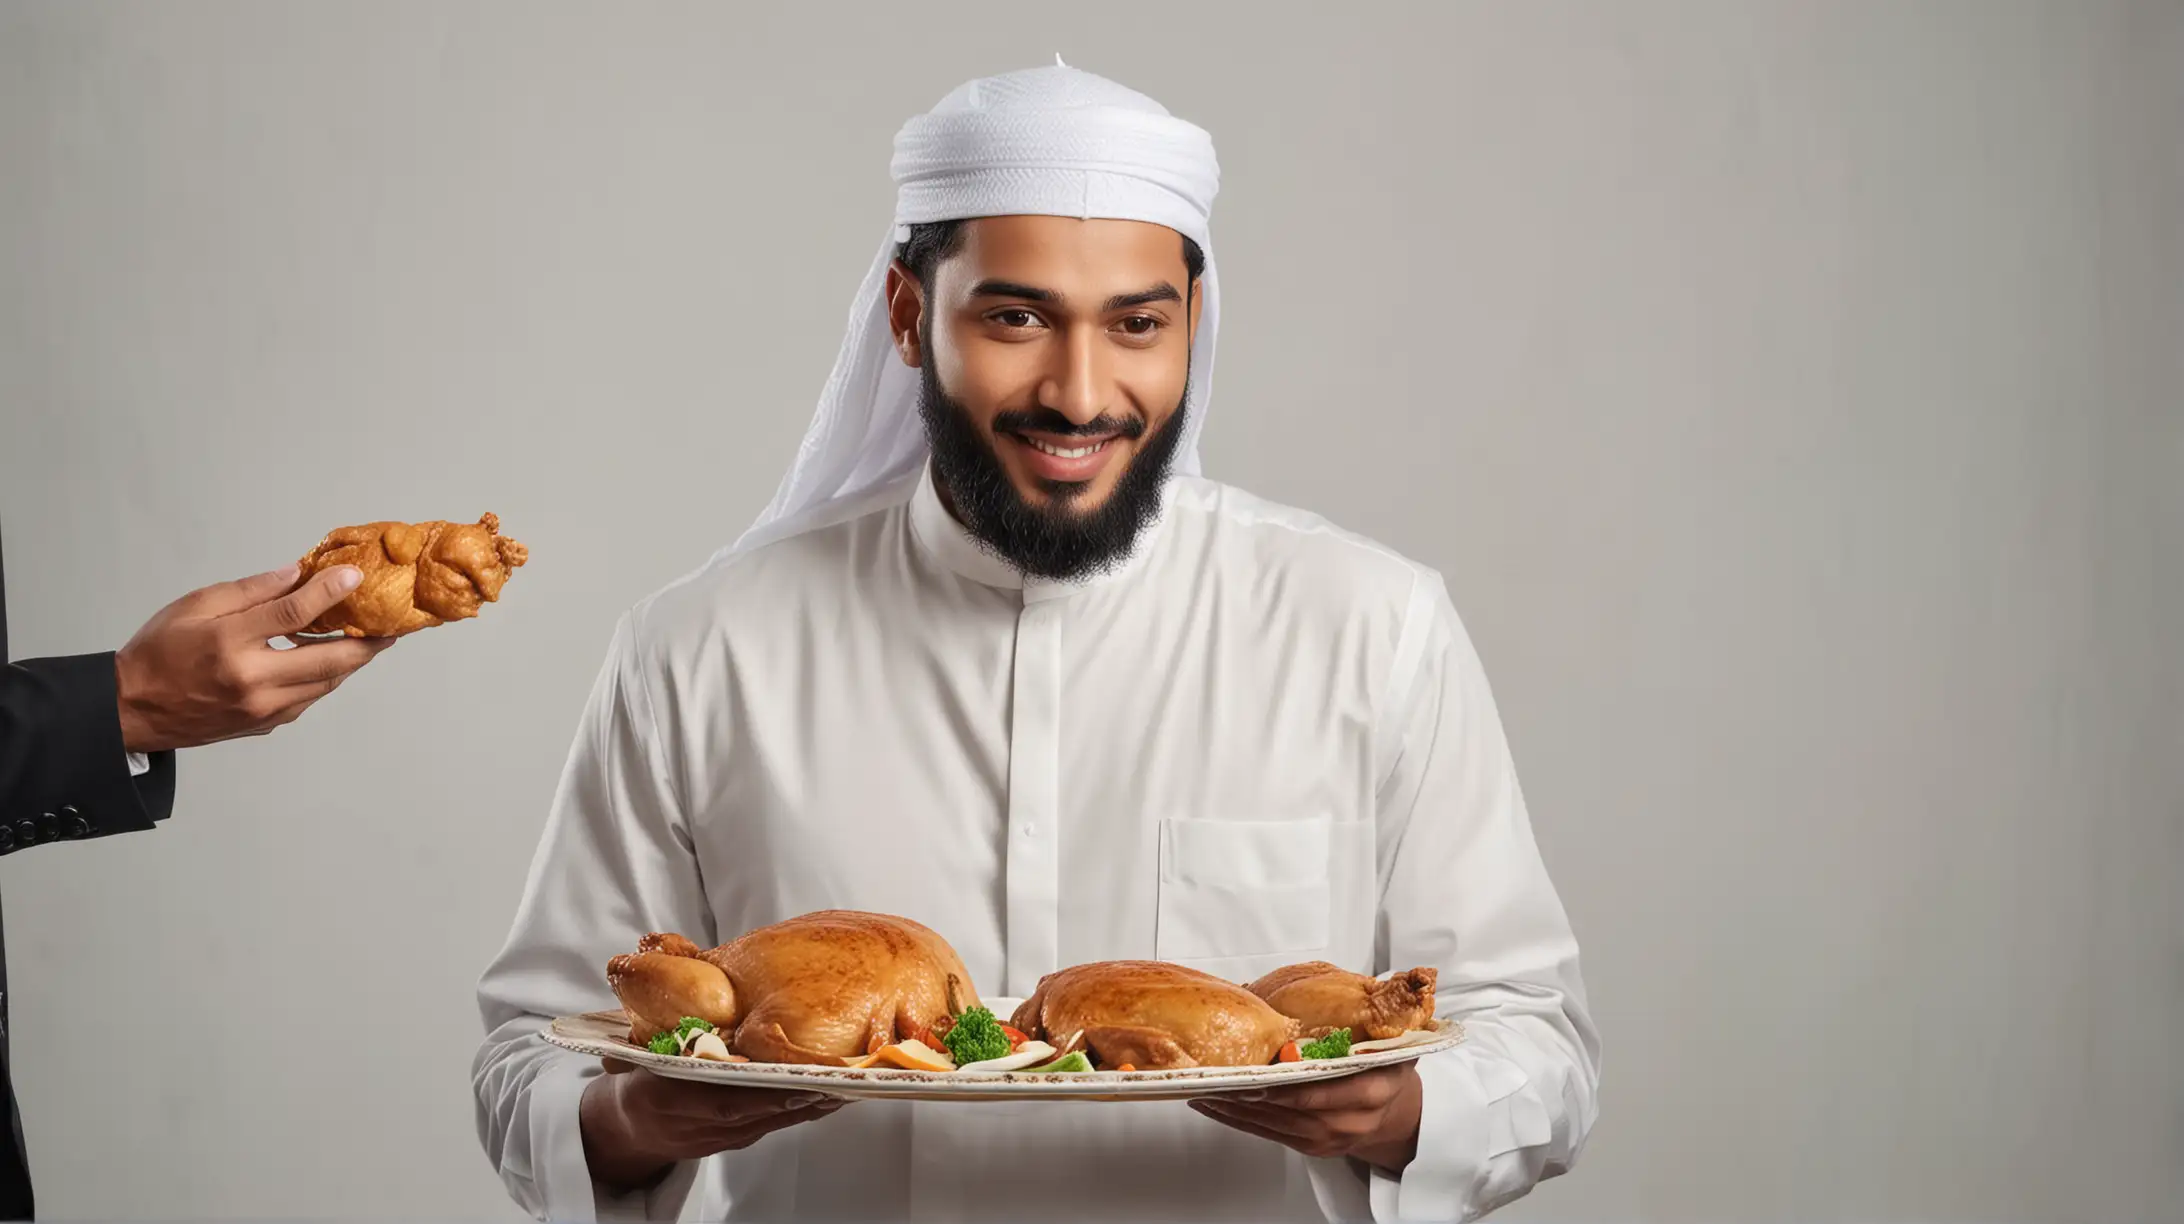 Handsome Muslim Man Serving Cooked Chicken to Friend During Ramadan